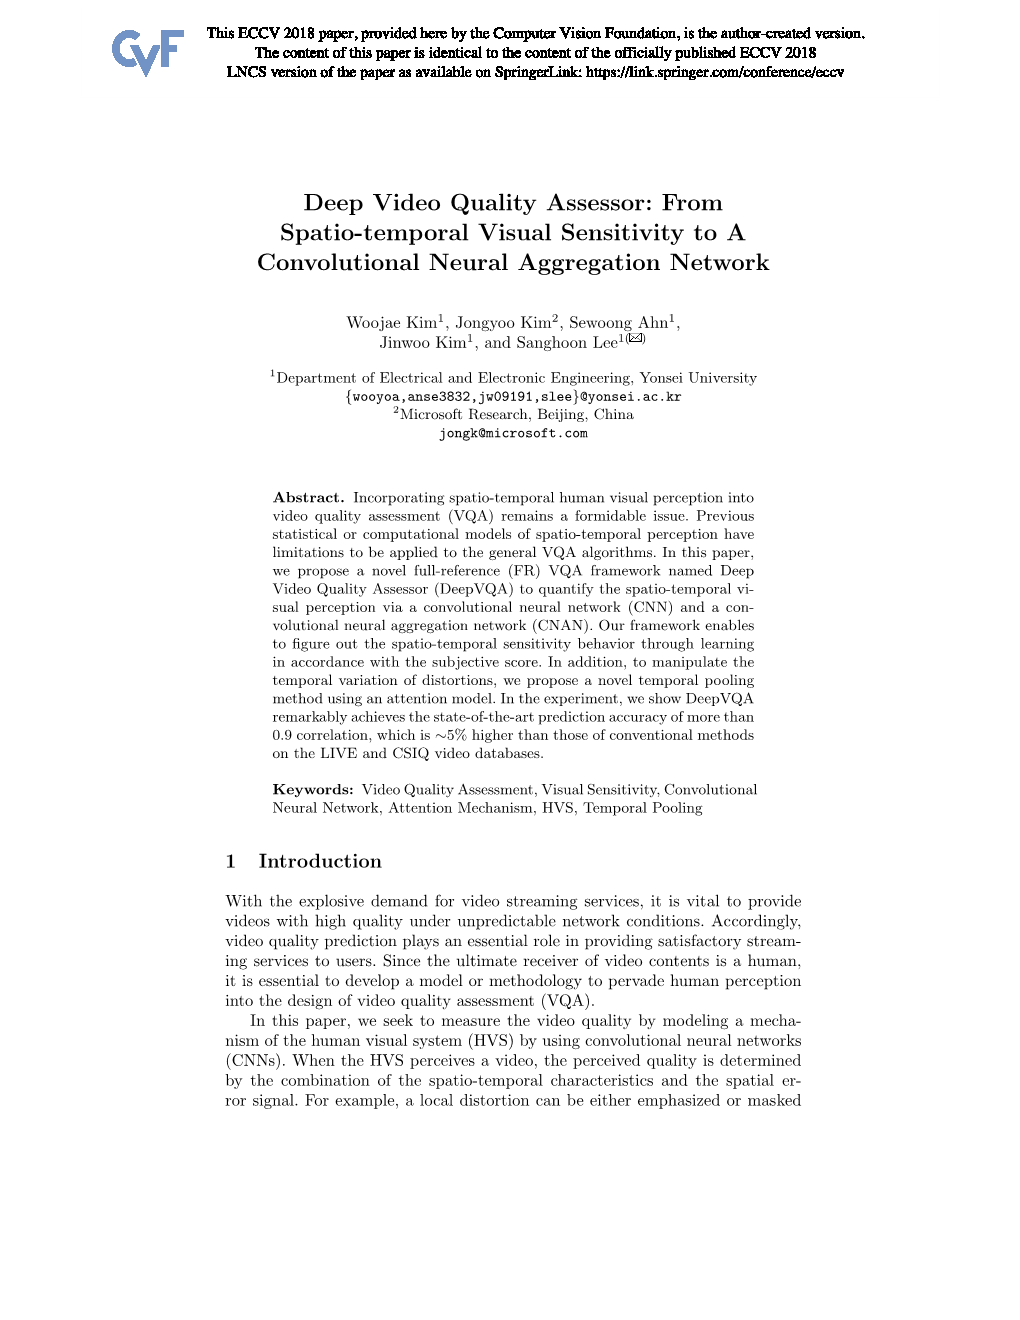 Deep Video Quality Assessor: from Spatio-Temporal Visual Sensitivity to a Convolutional Neural Aggregation Network